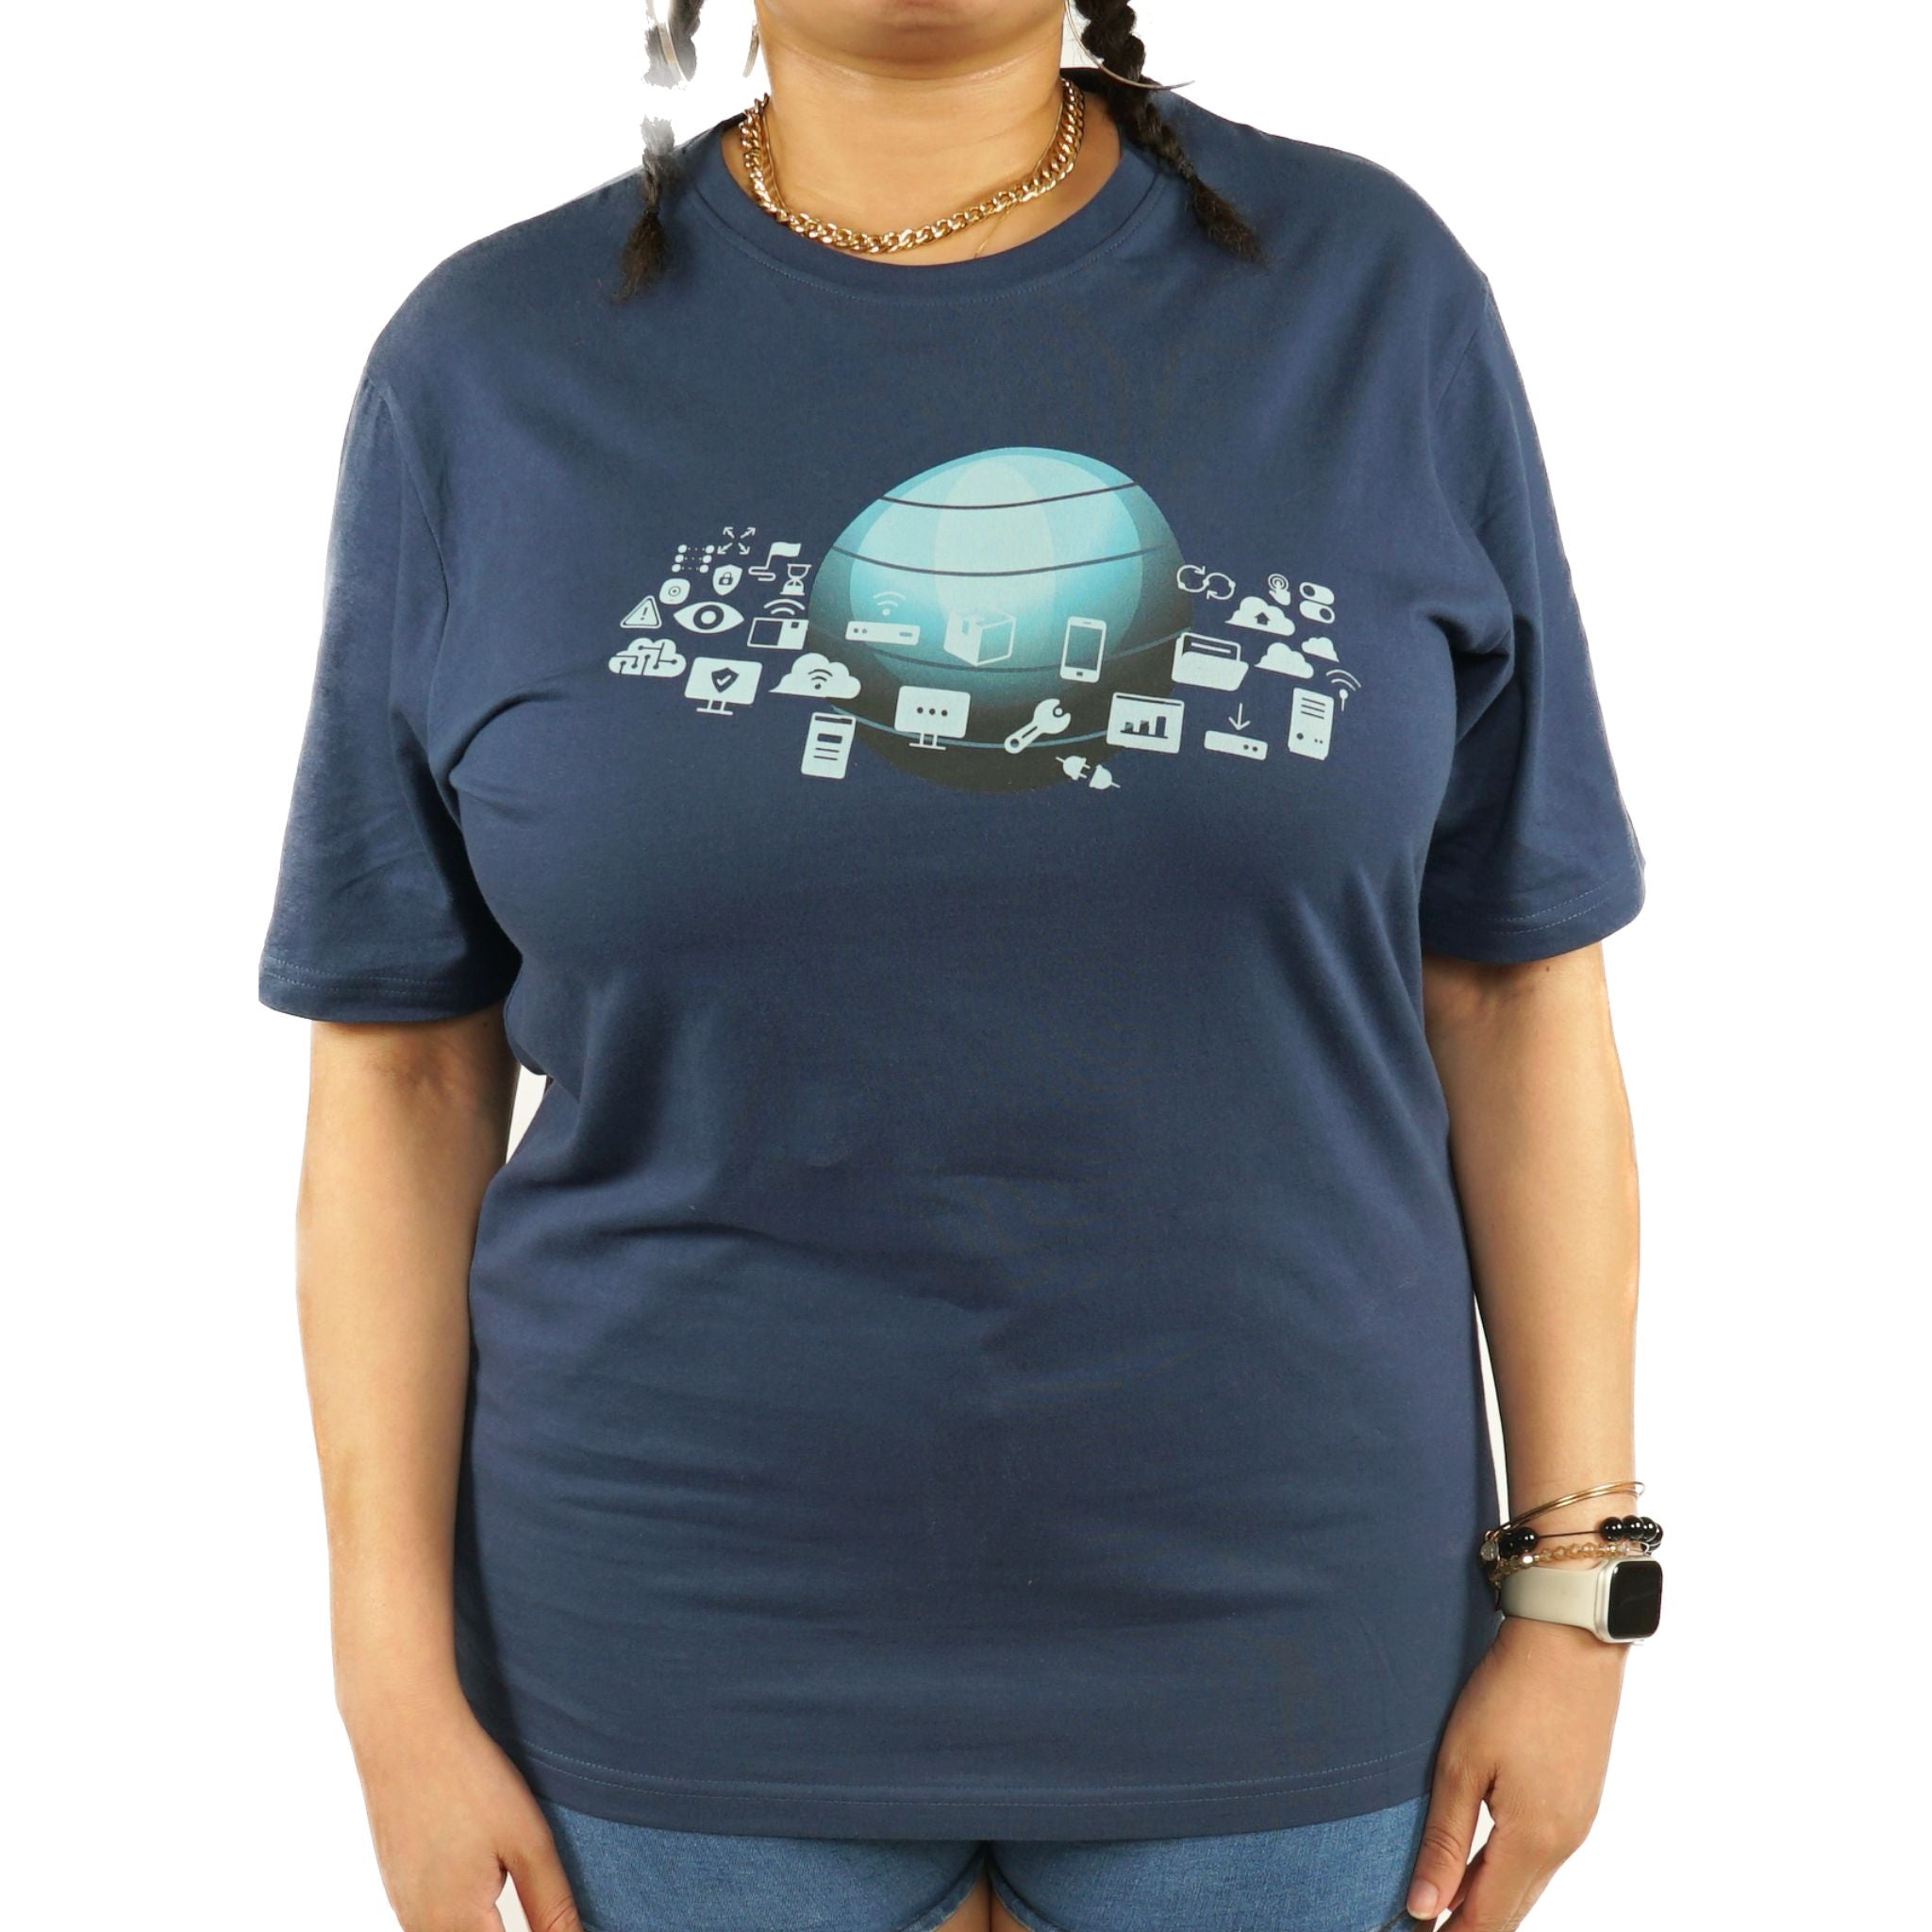 Earth Tech Rings Unisex Adults T-Shirt